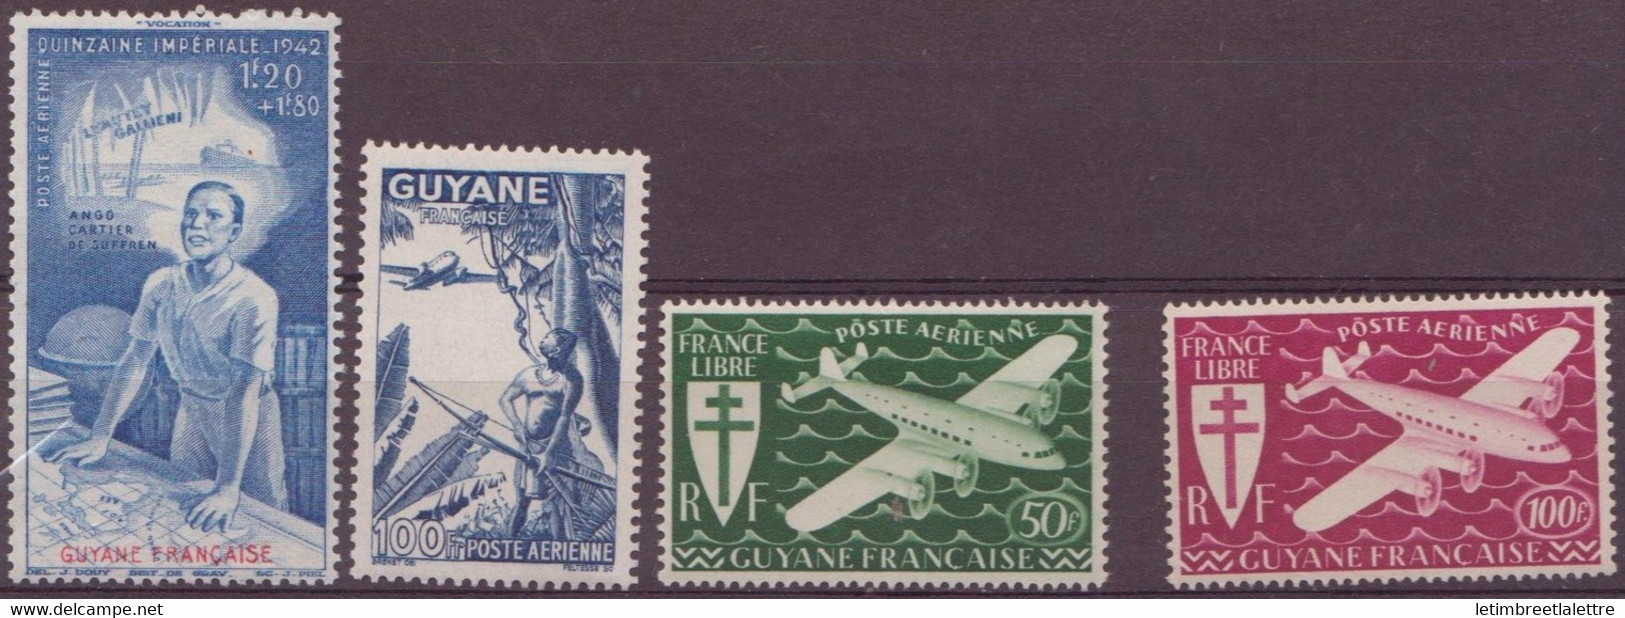 ⭐ Guyane - Poste Aérienne - YT N° 24 à 27 ** - Neuf Sans Charnière - 1944 / 1945 ⭐ - Neufs